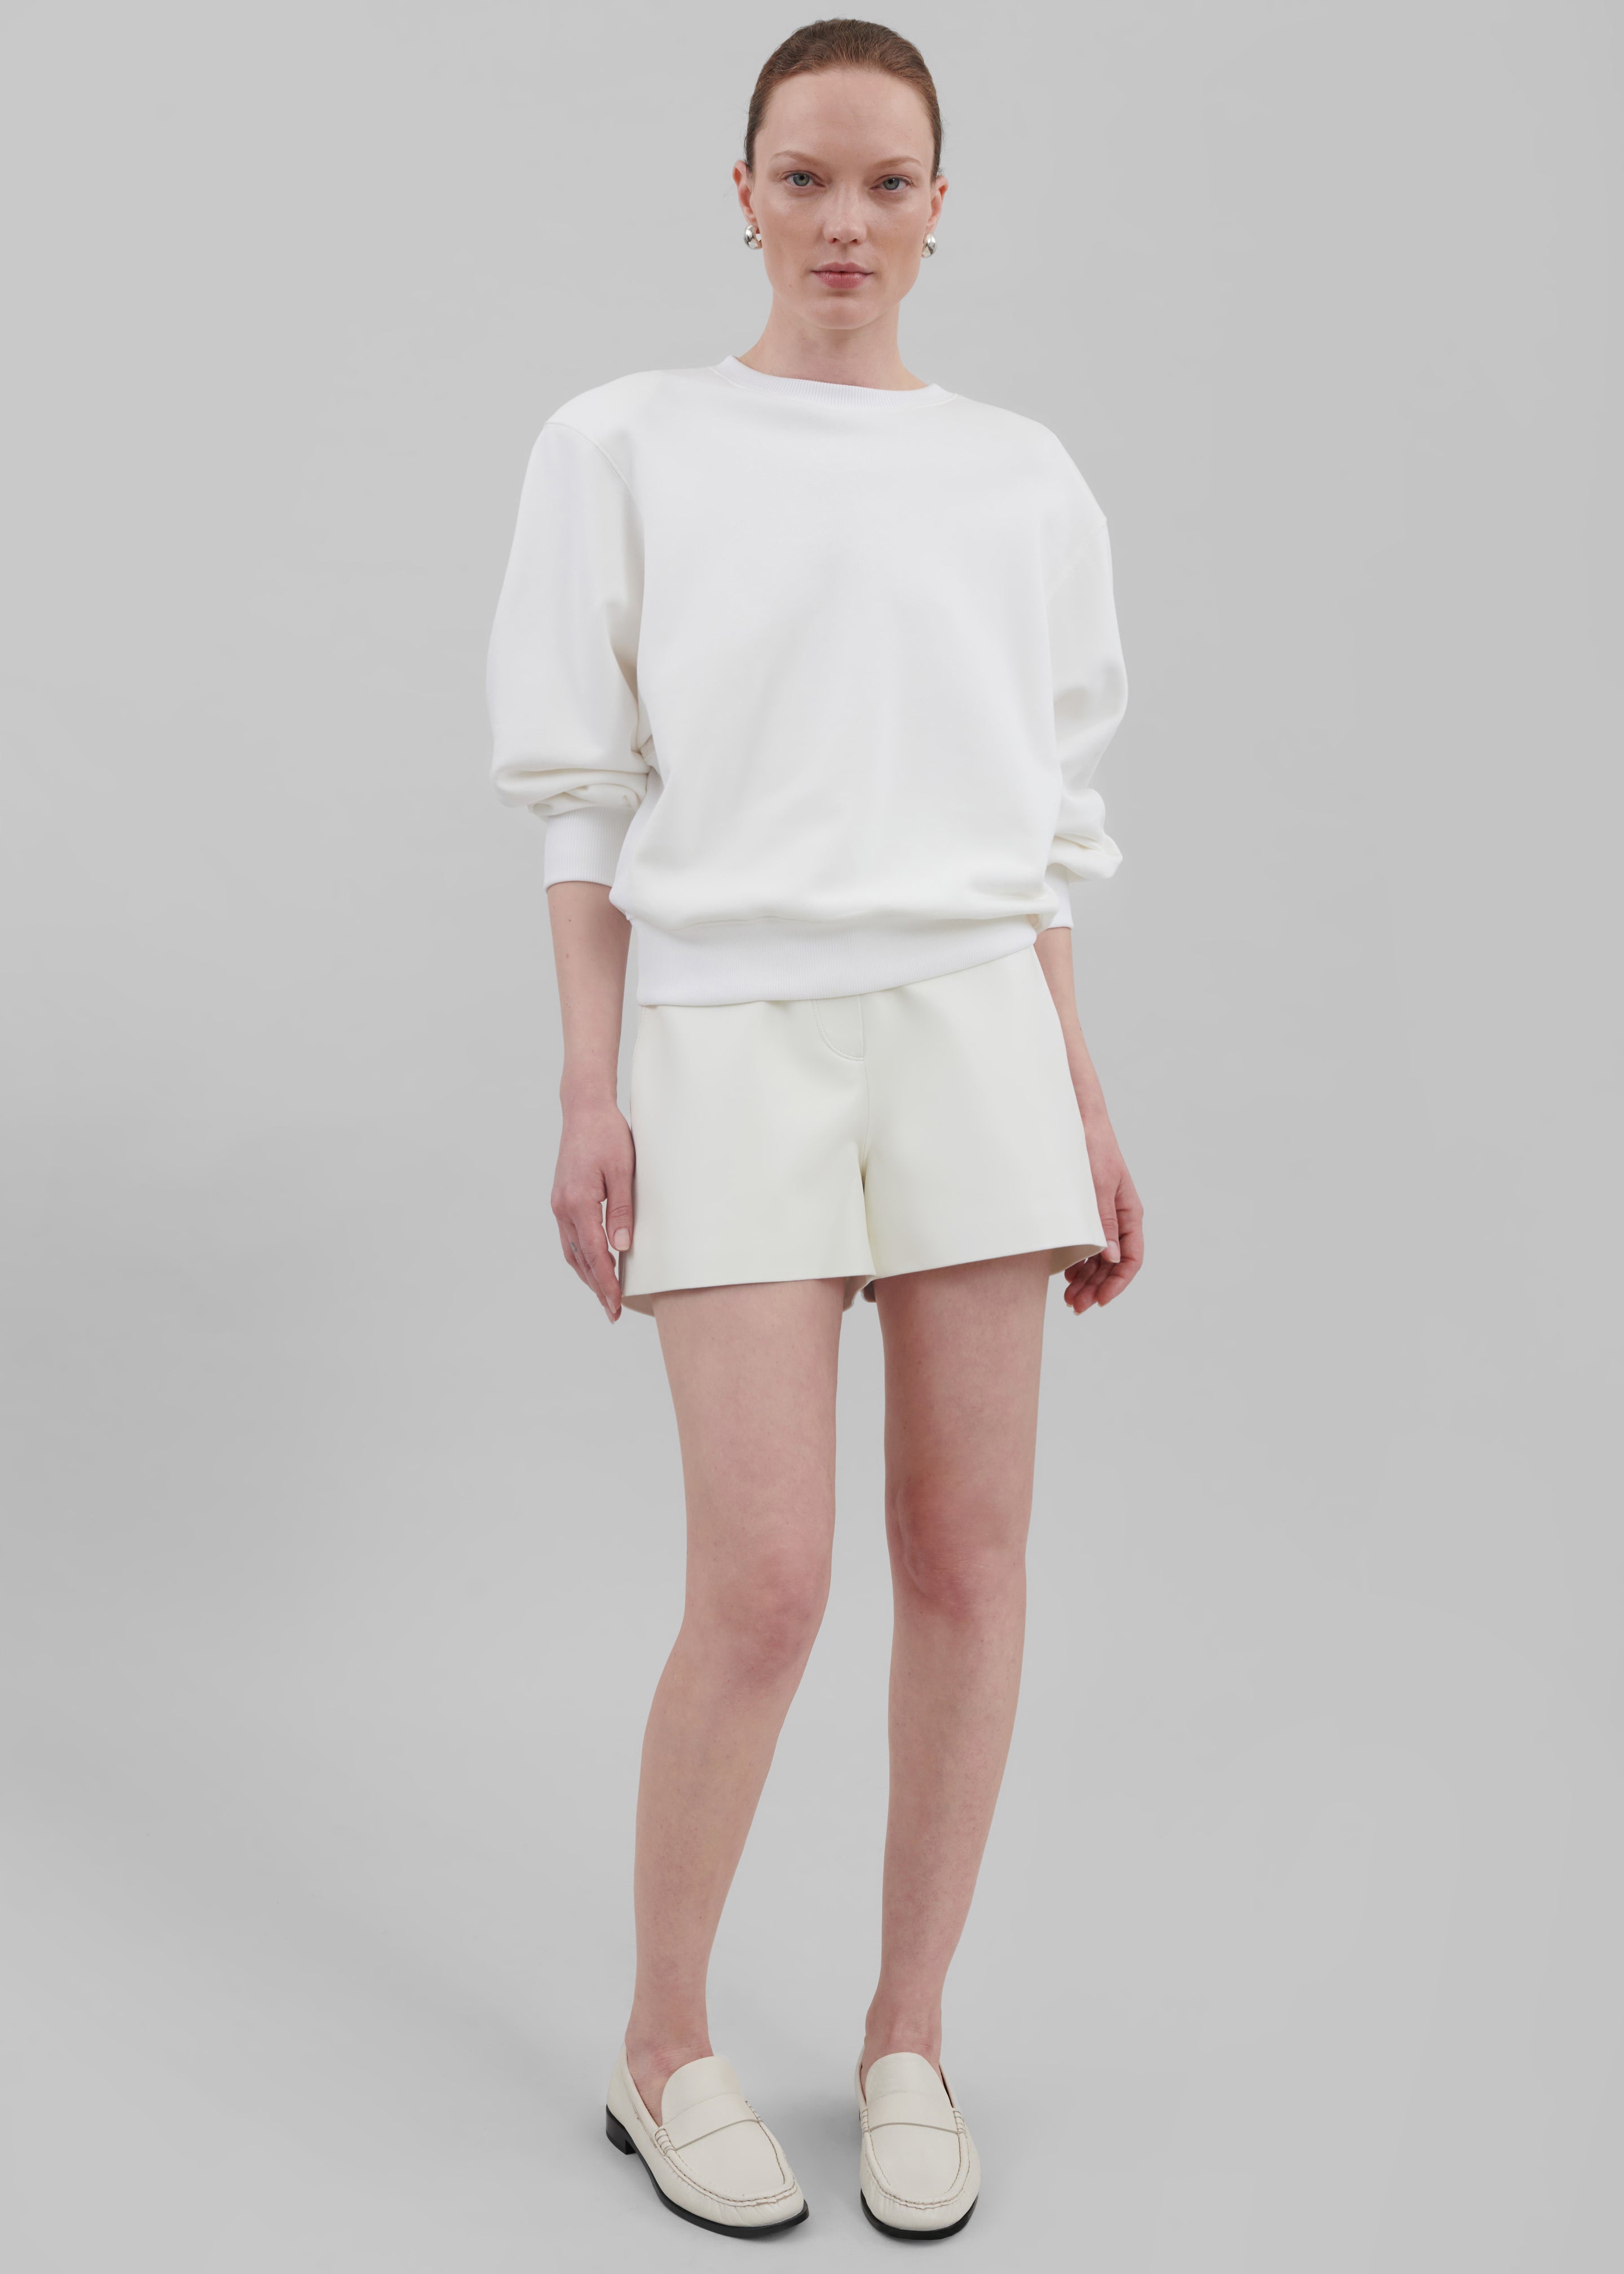 Cassie Faux Leather Mini Shorts - White - 7